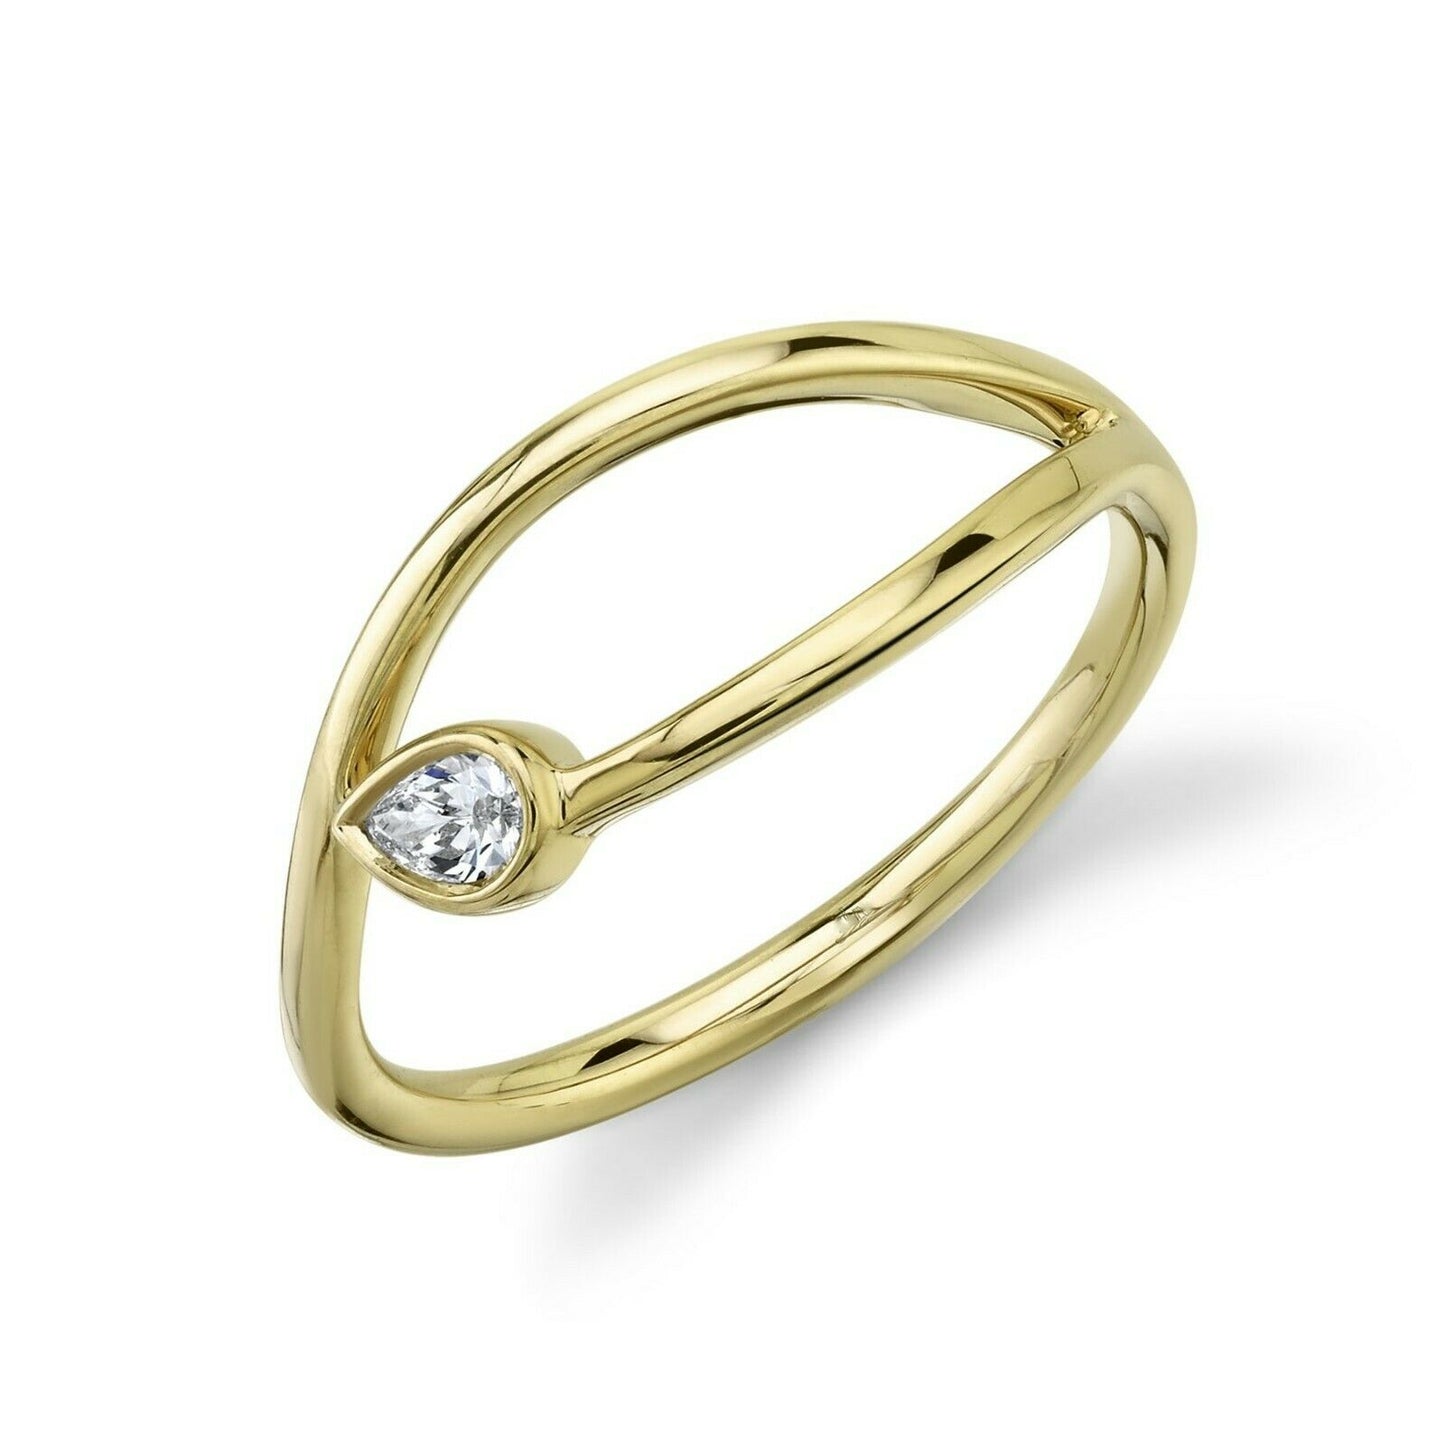 14K Gold 0.08 CT Pear Diamond Ring Minimalist Dainty Fashion Statement Cocktail